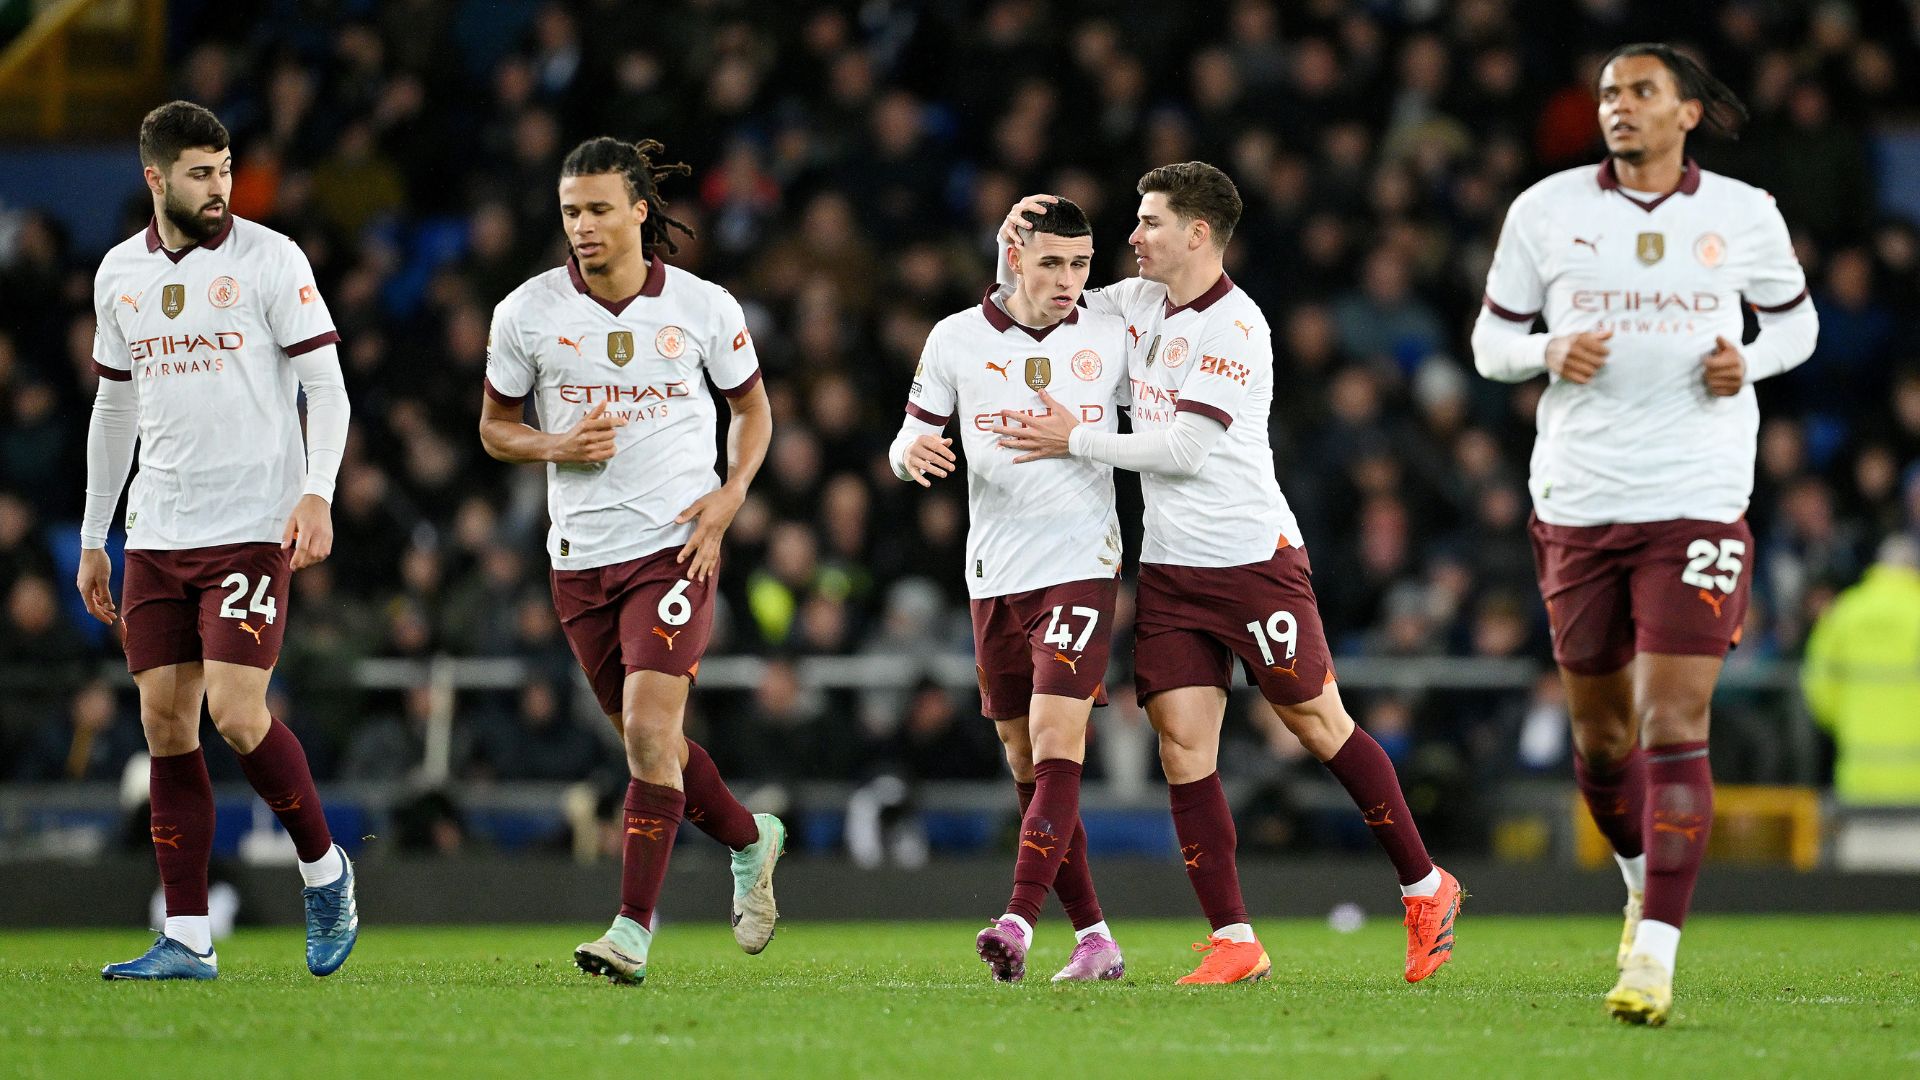 Foden marcou o primeiro gol do City contra o Everton (Crédito: Getty Images)